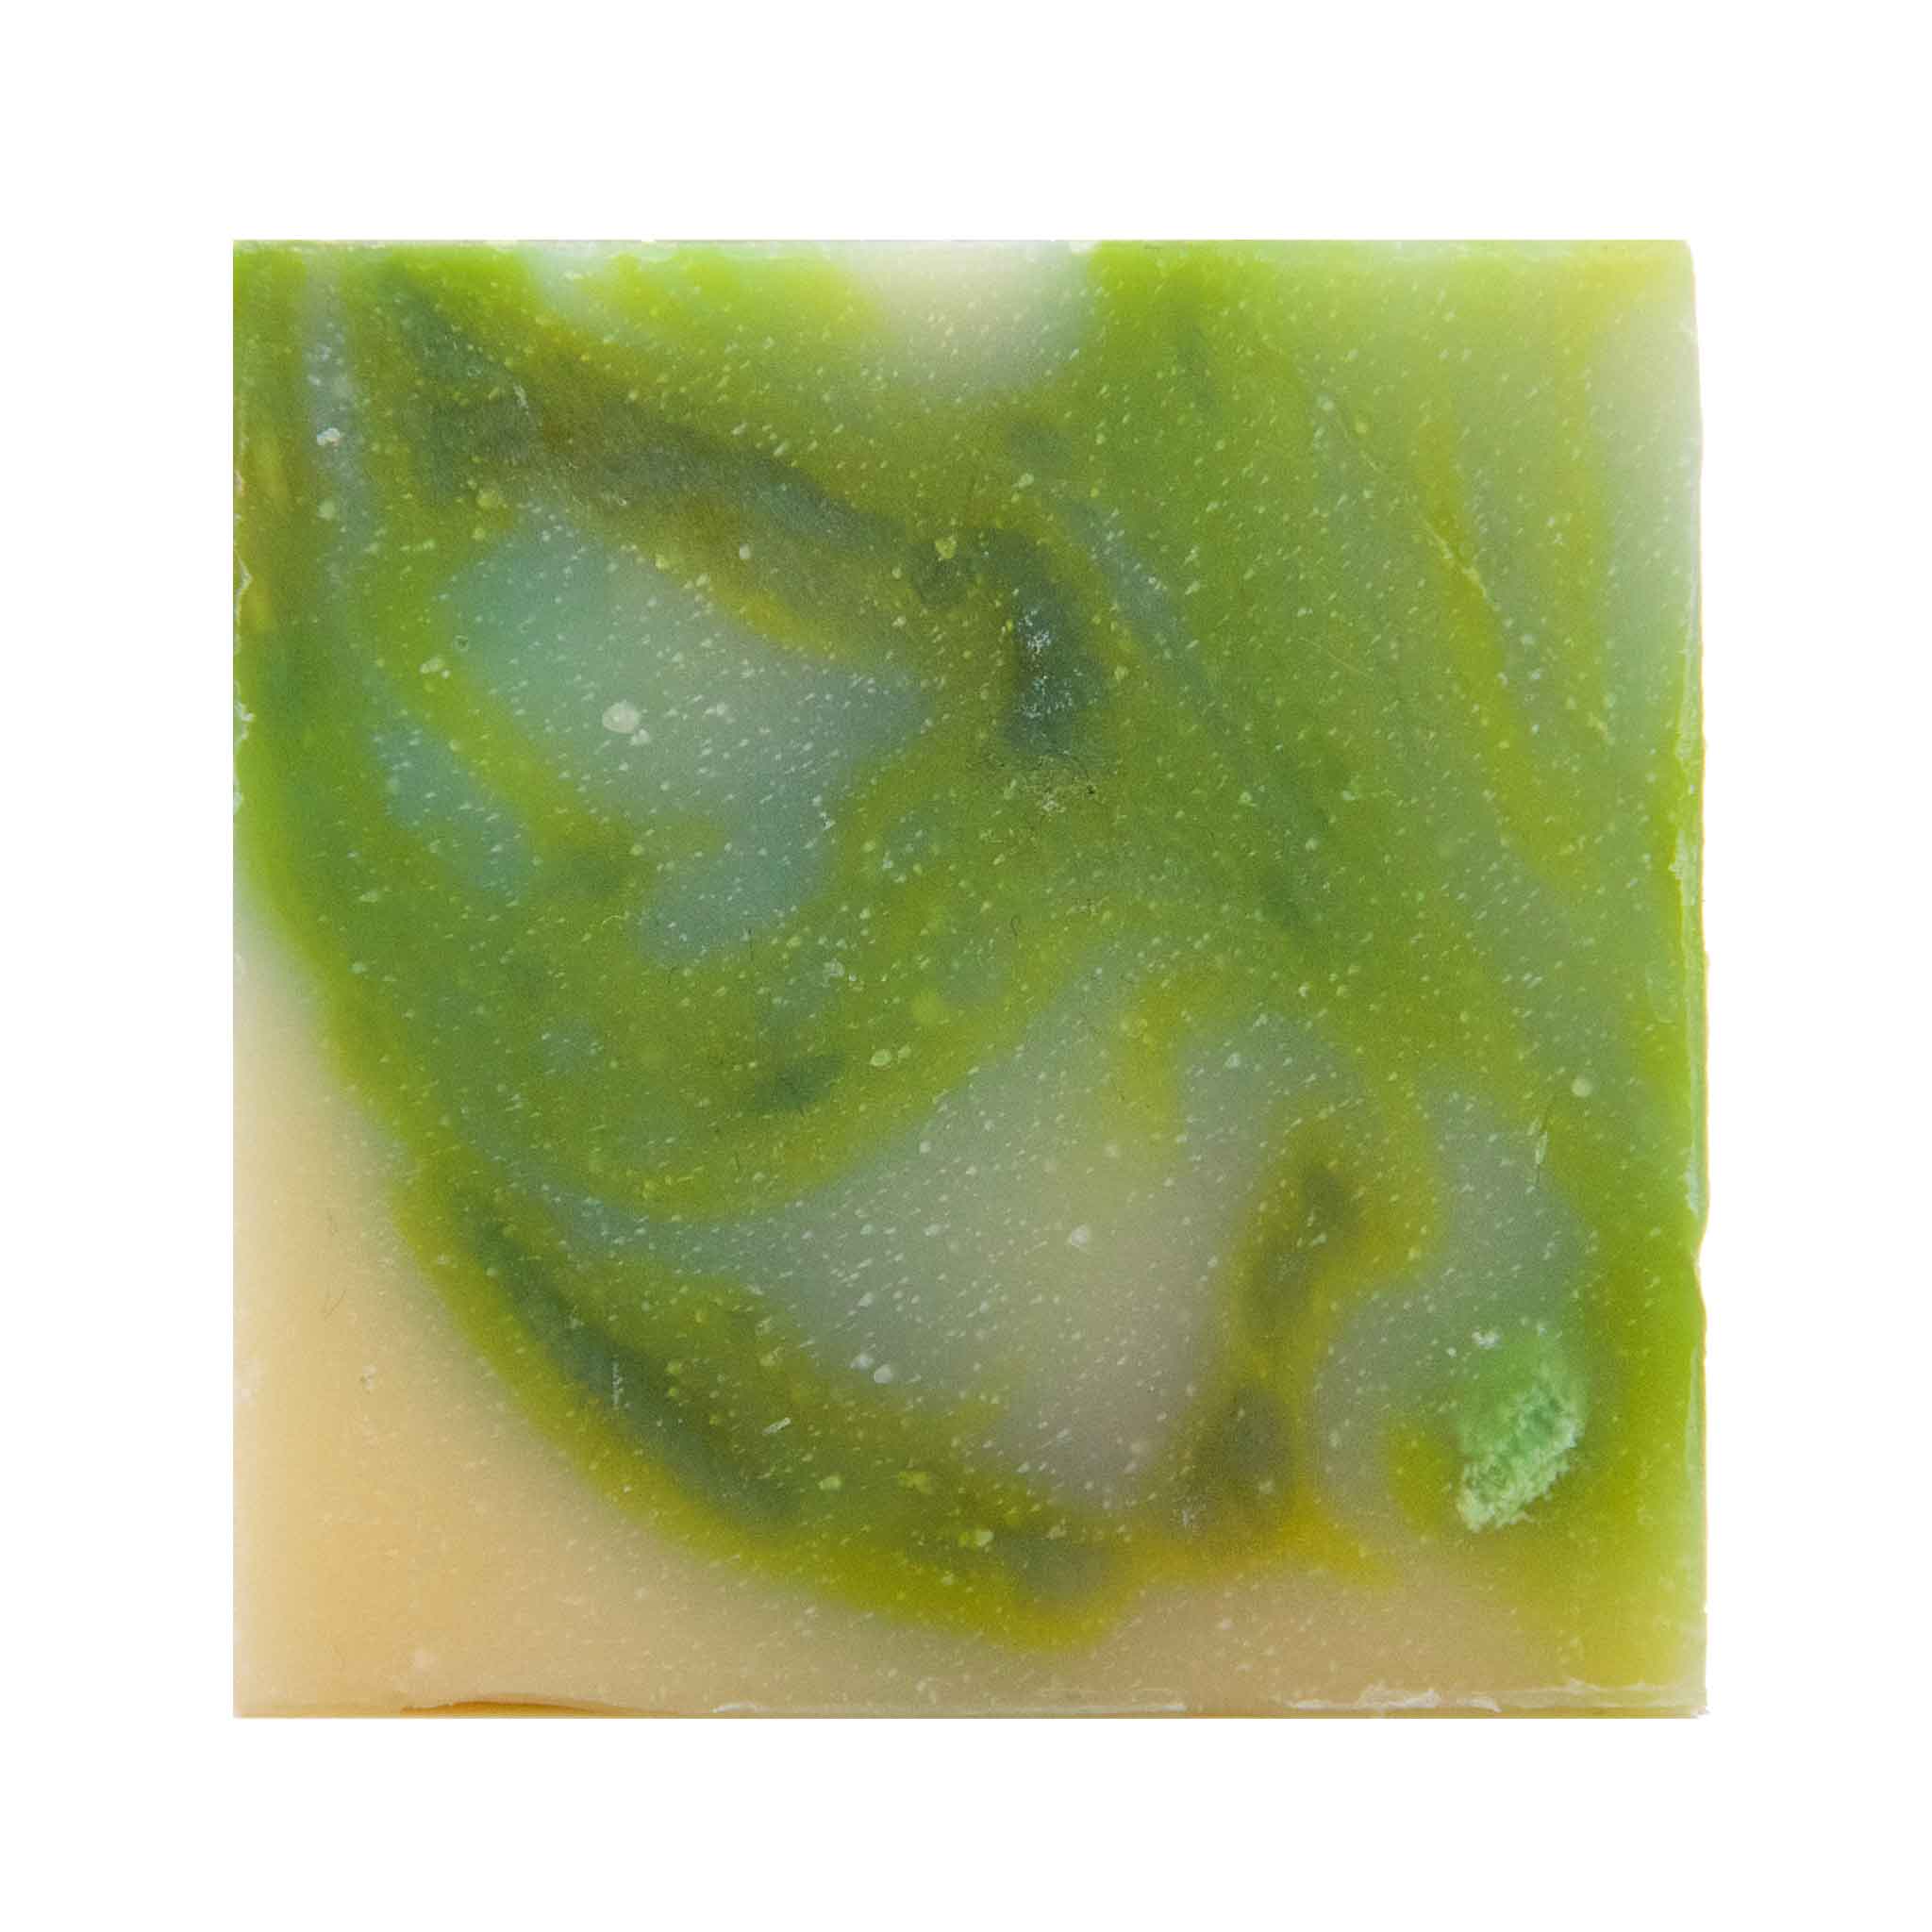 Dr. Squatch Cool Fresh Aloe Bar Soap –